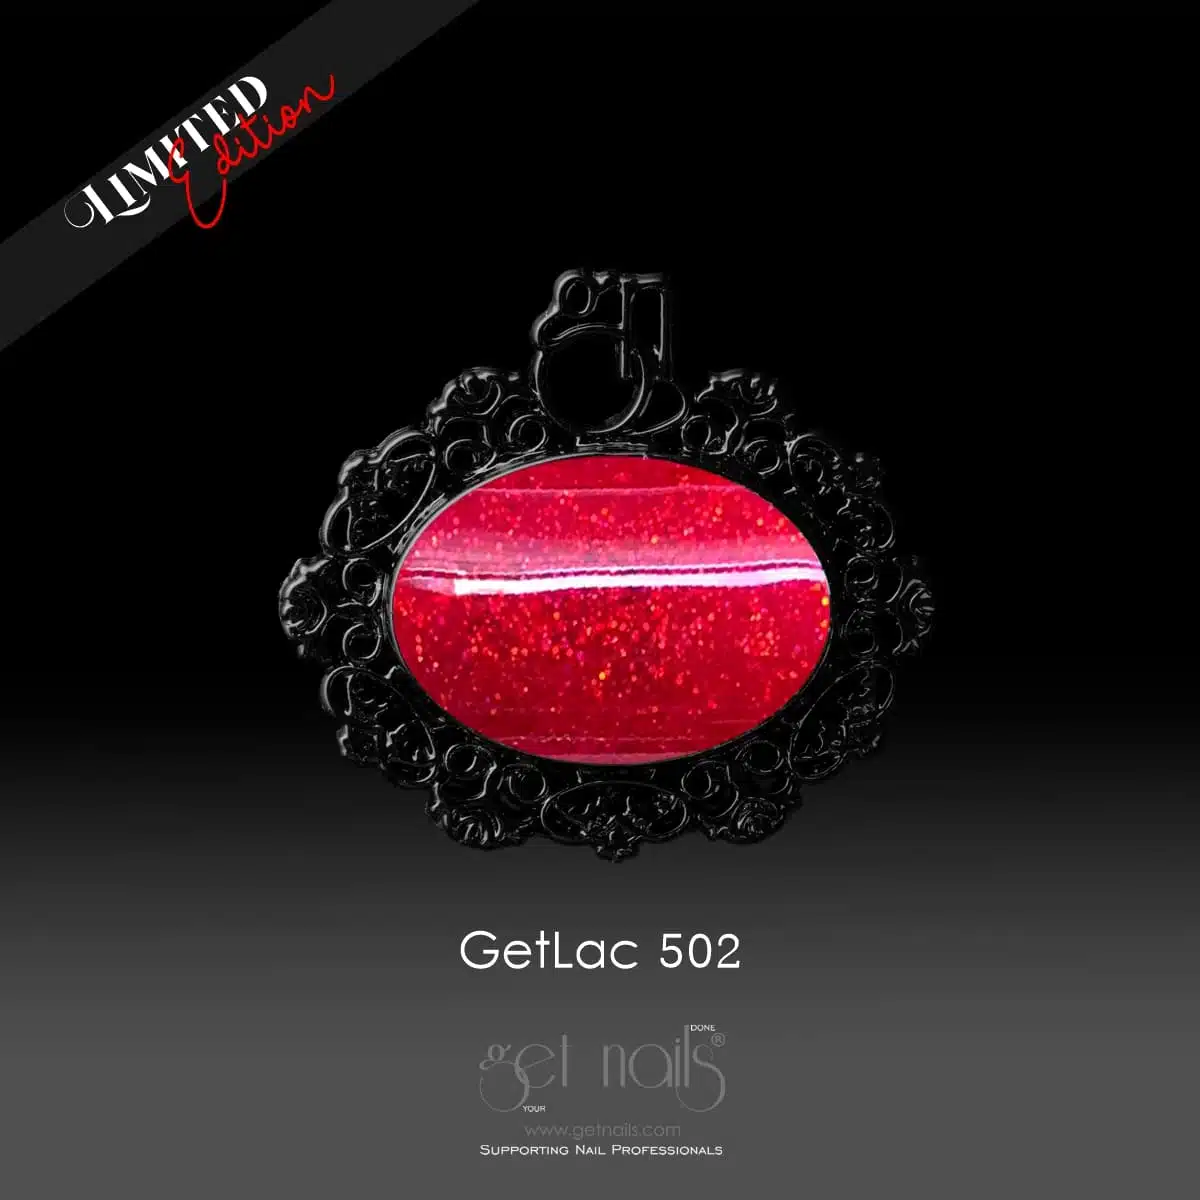 Get Nails Austria - GetLac 502 15 g